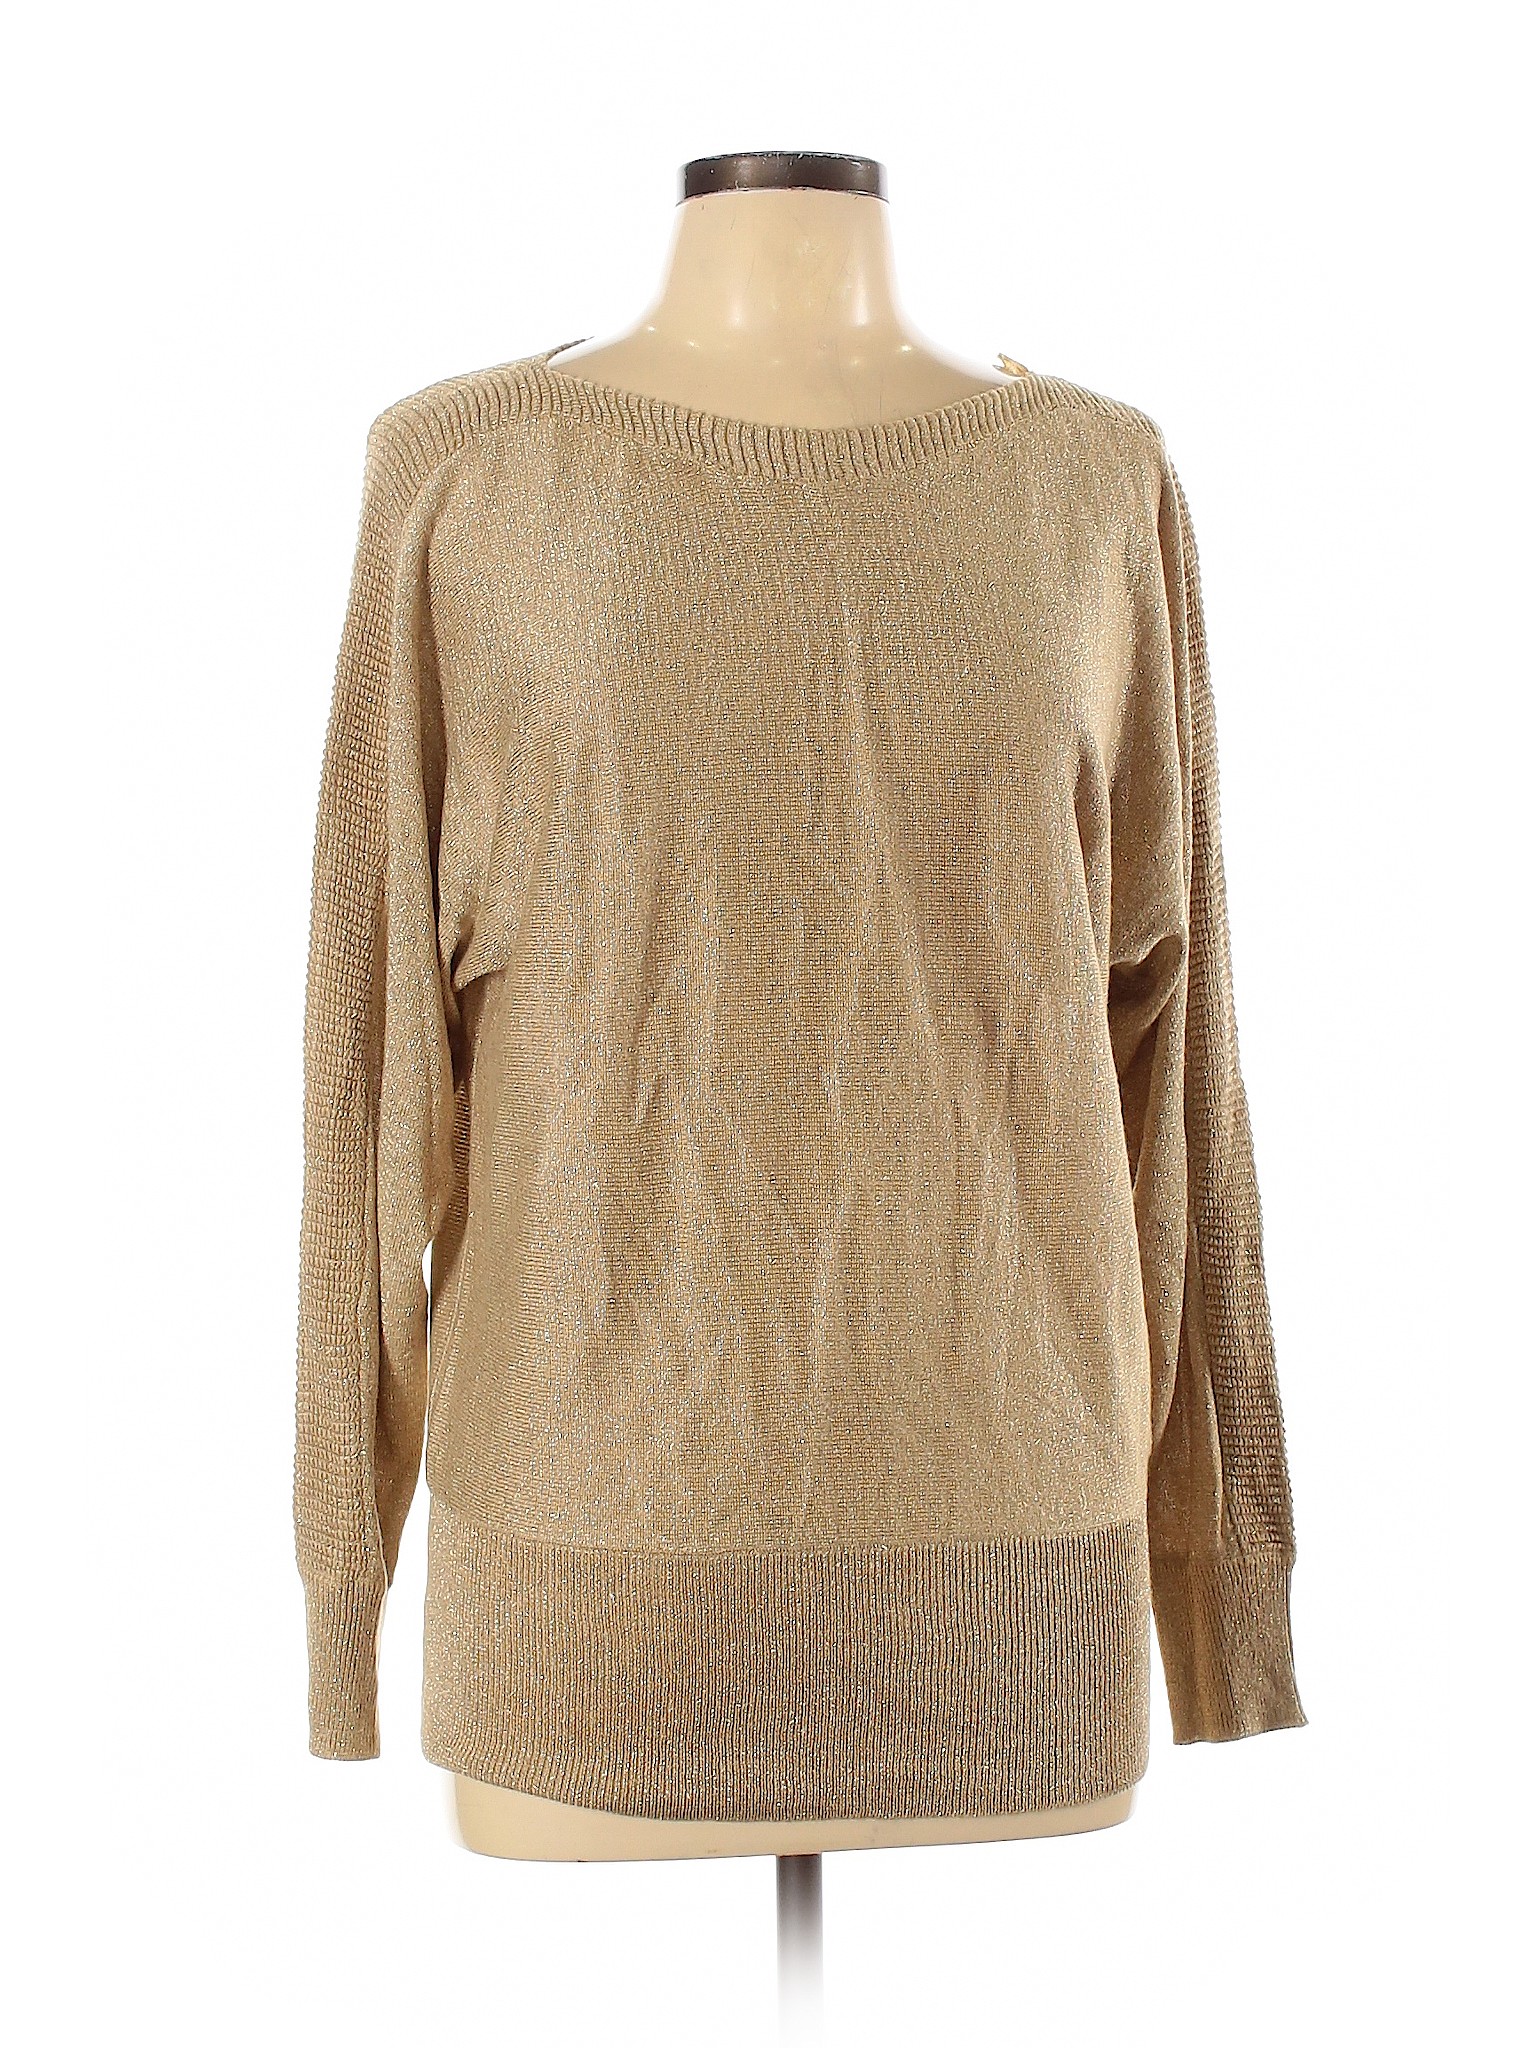 Joseph A. Women Brown Pullover Sweater L | eBay